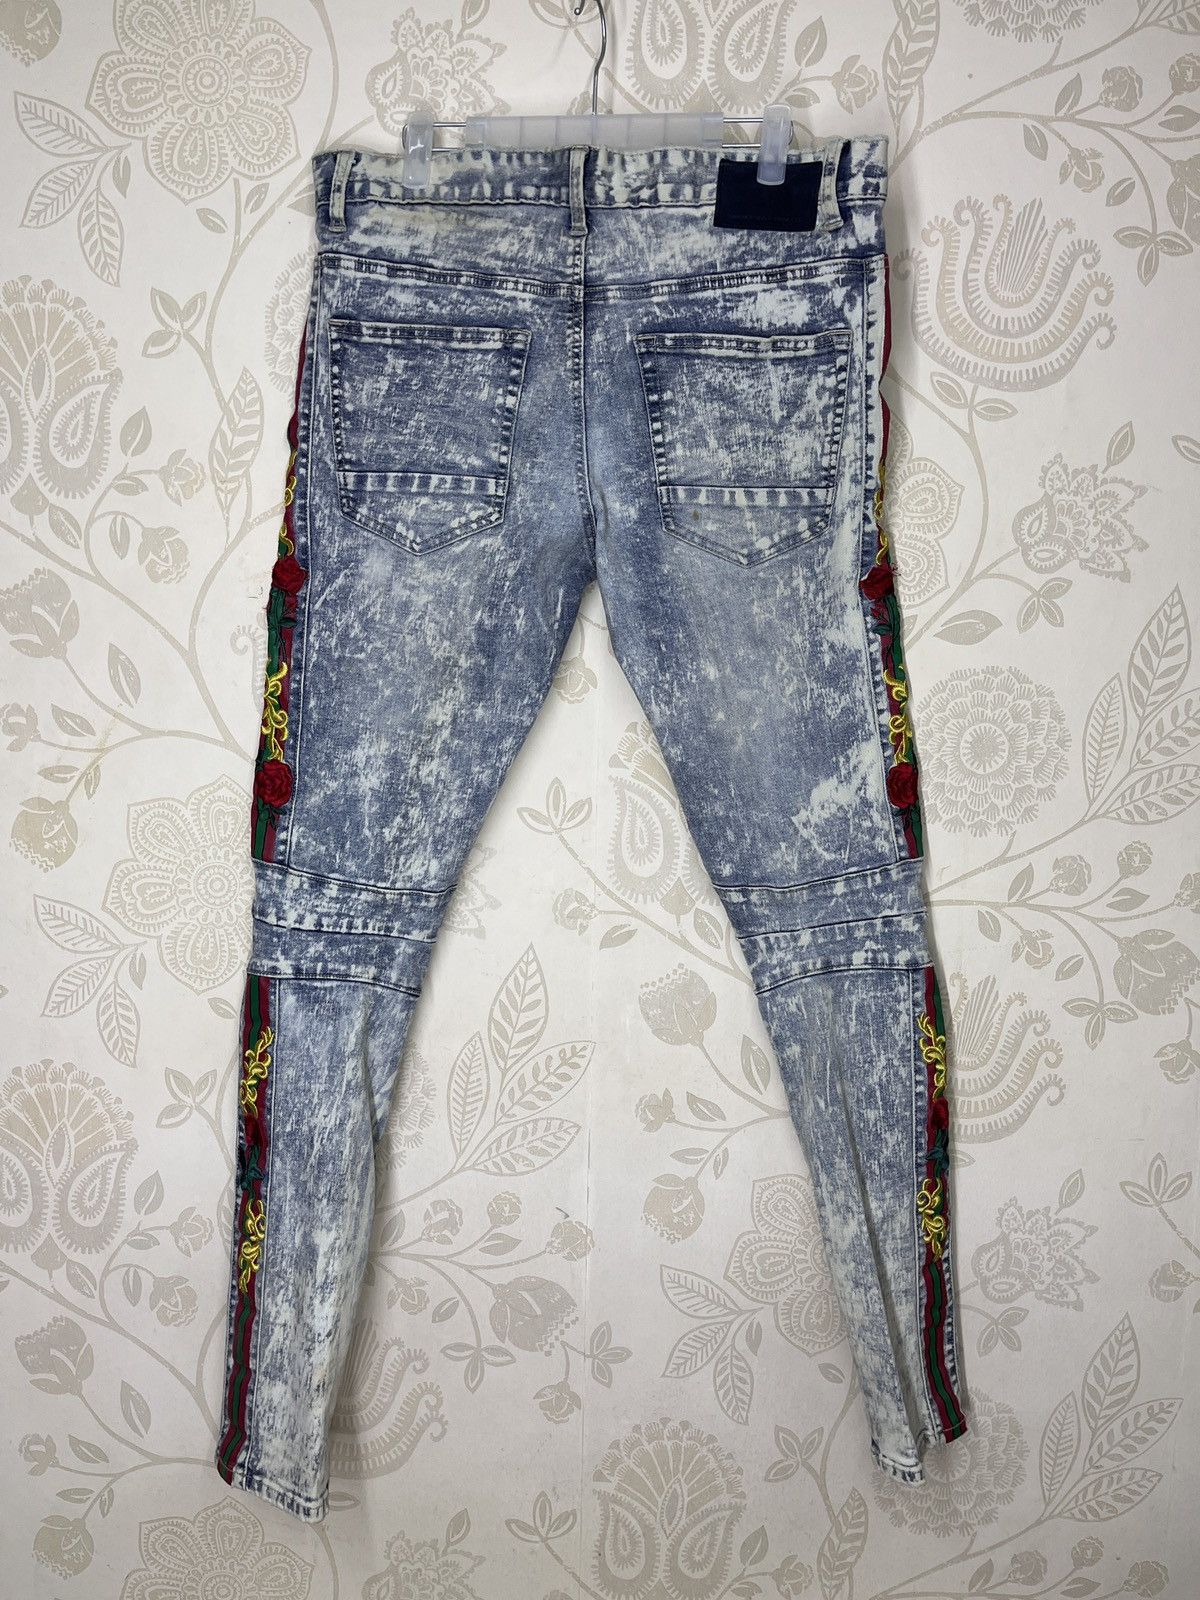 Avant Garde - Acid Wash Distressed SMOKE RISE Denim Jeans Japan - 2